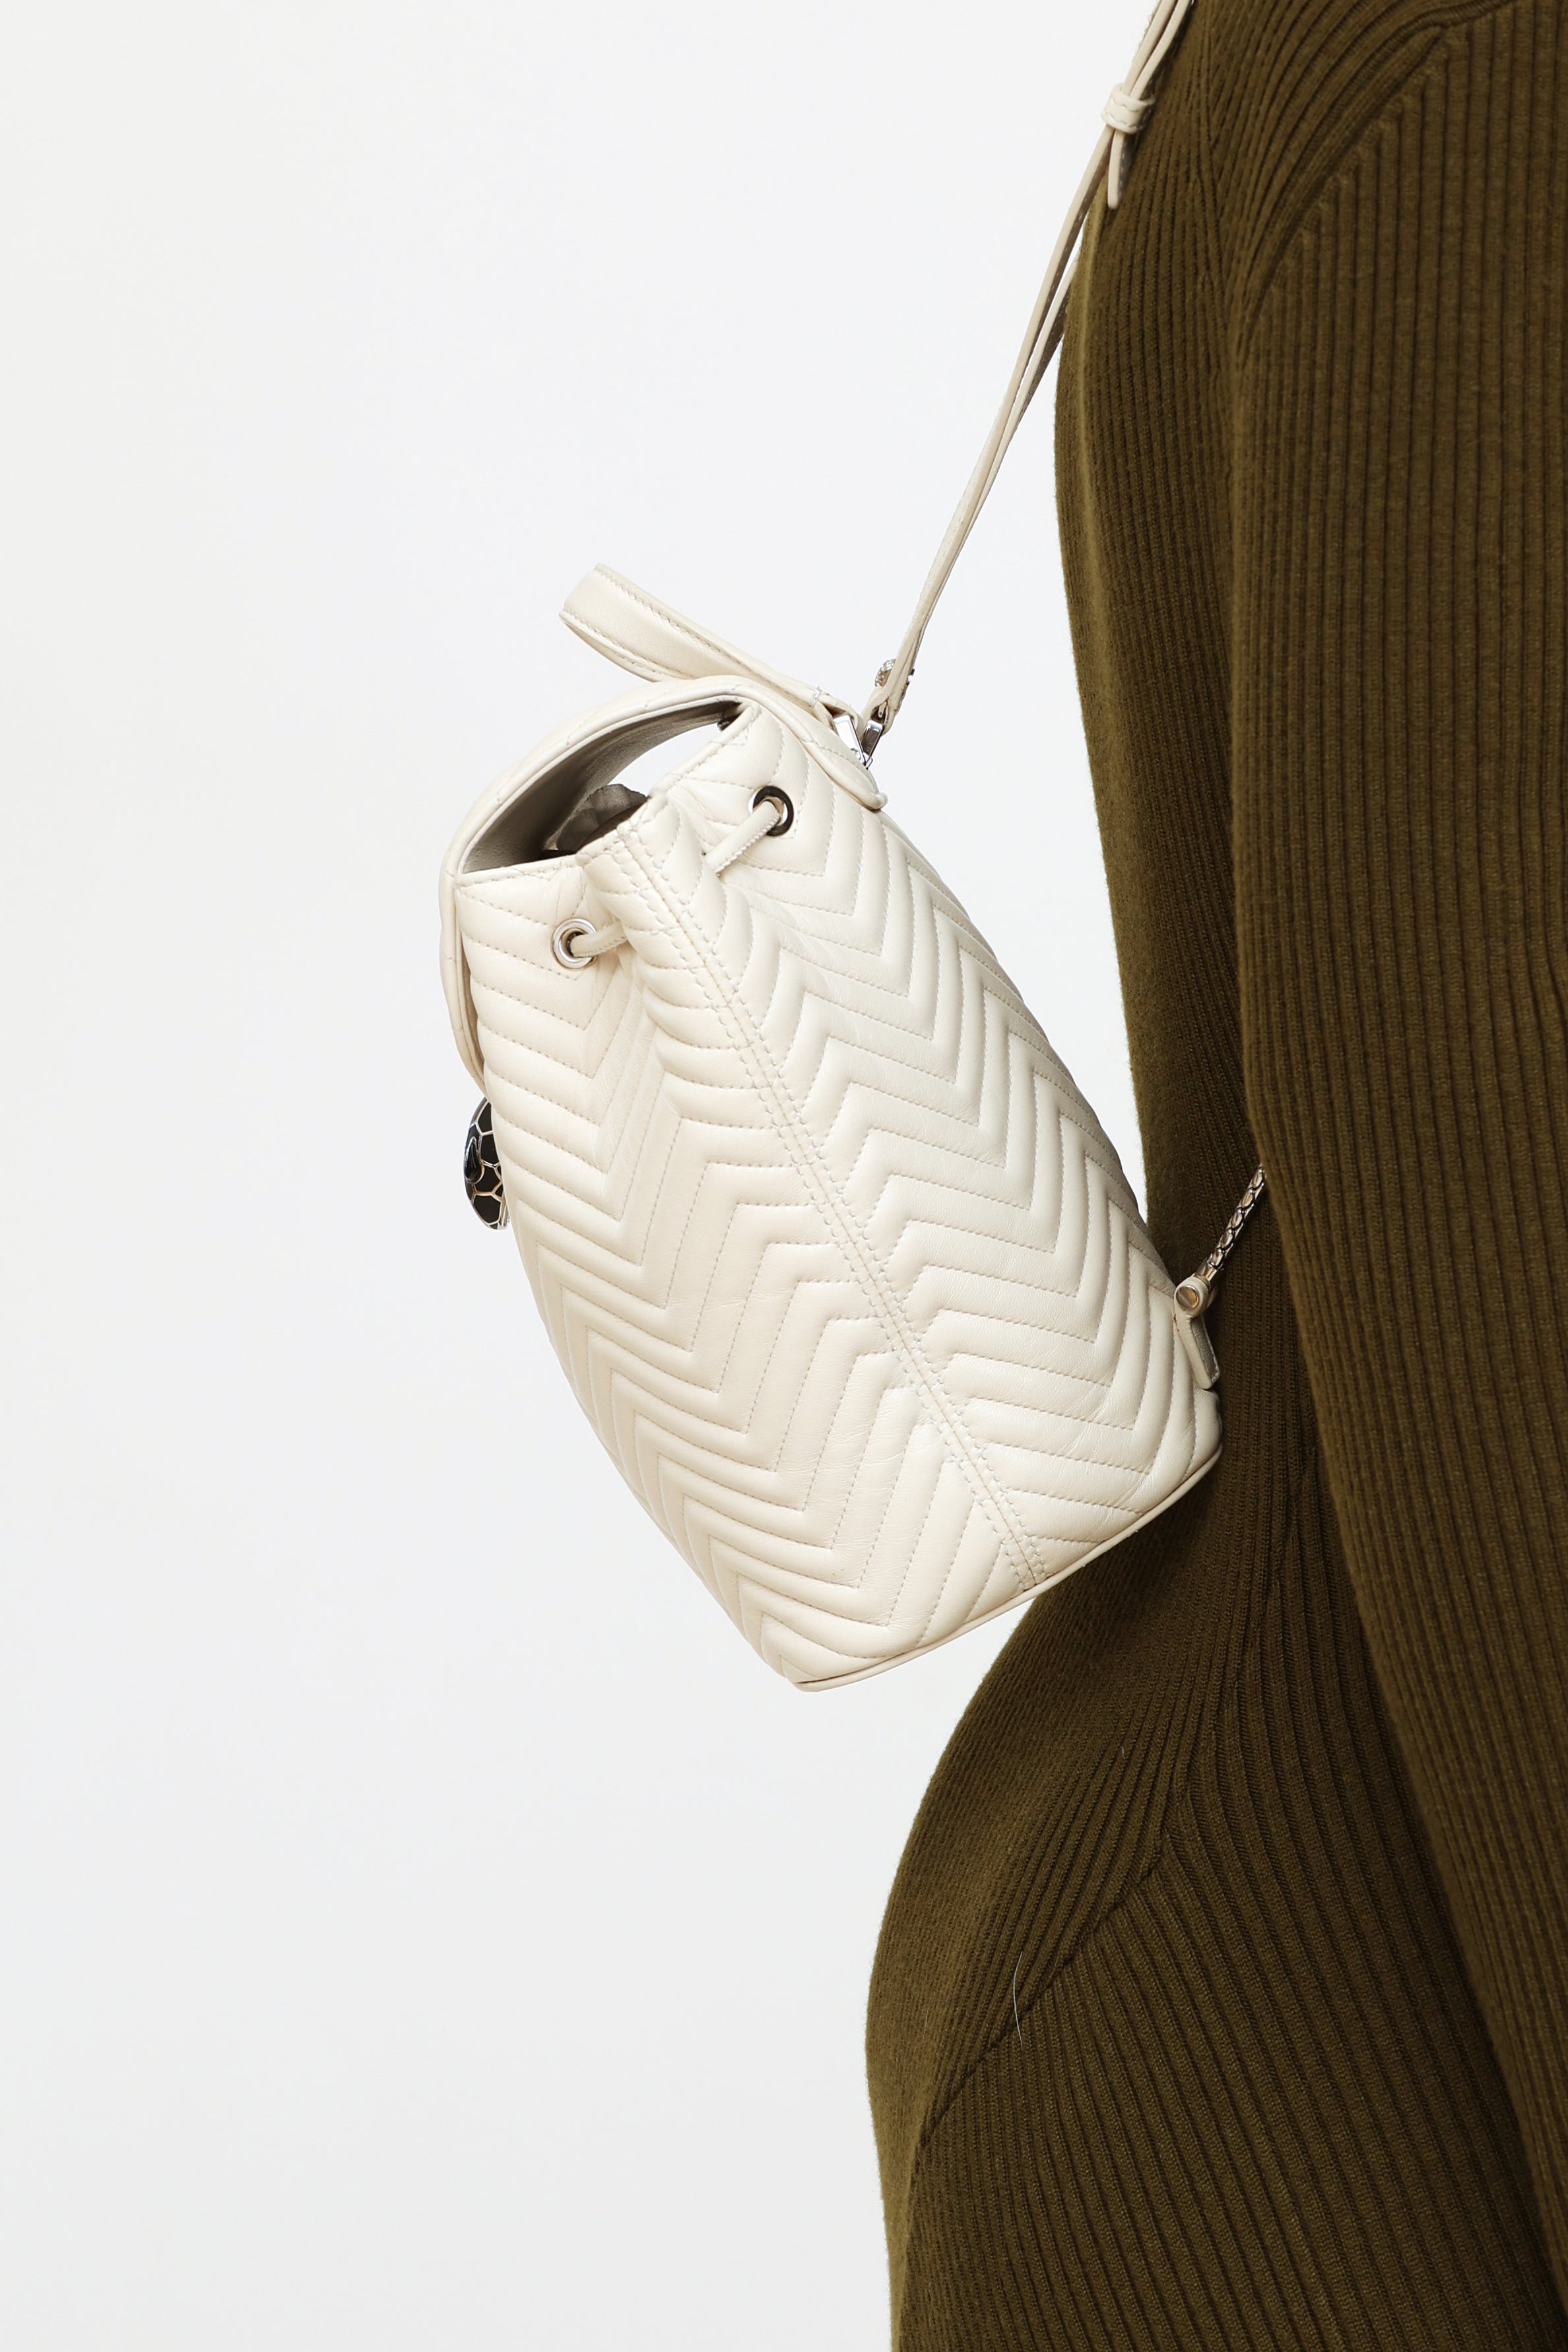 Serpenti leather handbag Bvlgari White in Leather - 8760172